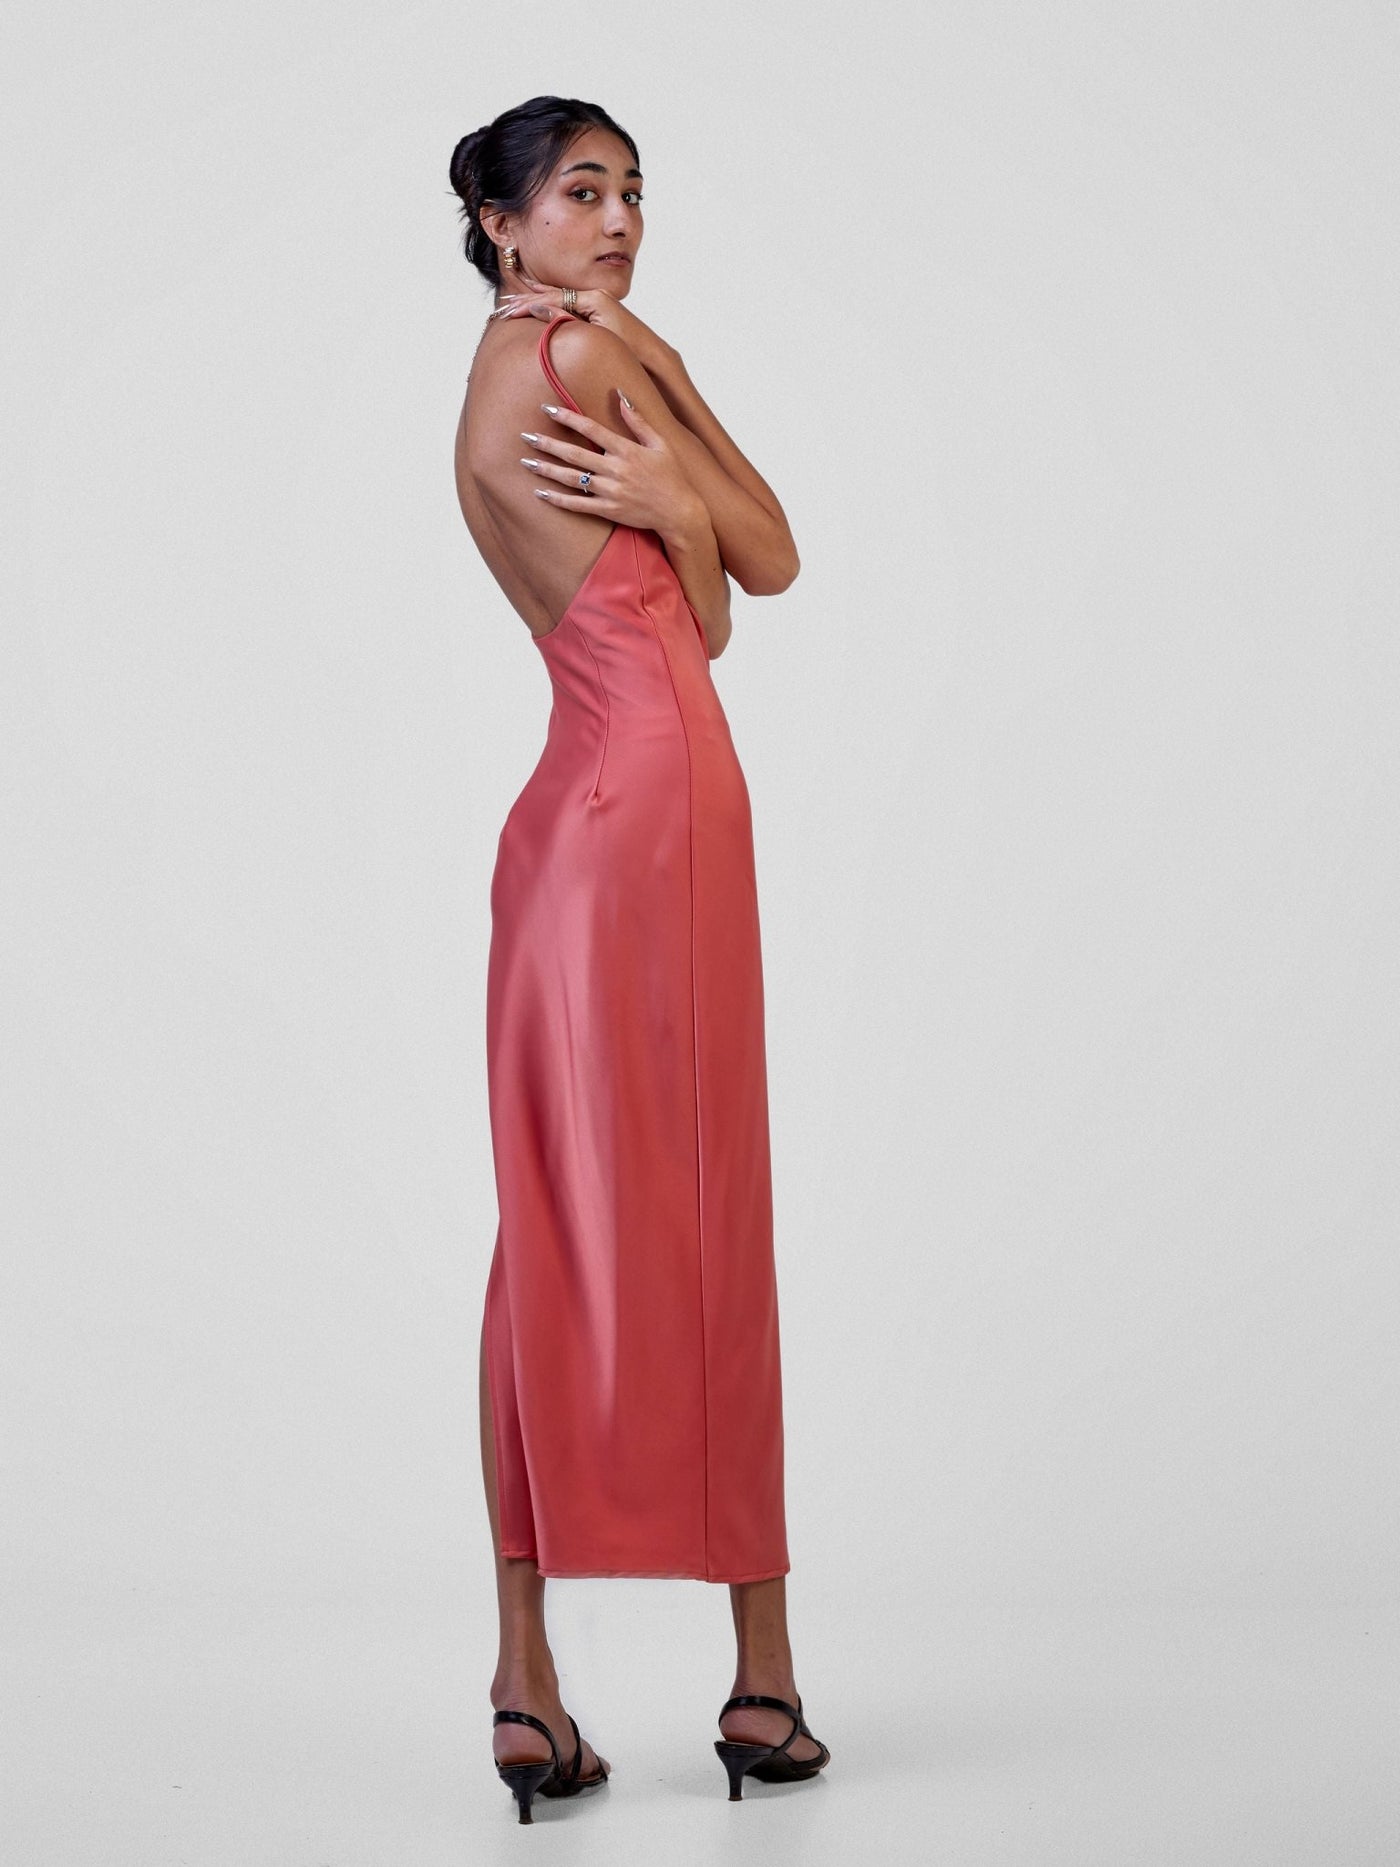 Carrie Wahu X SZ Long Satin Double Strap Dress - Blush Pink - Shopzetu